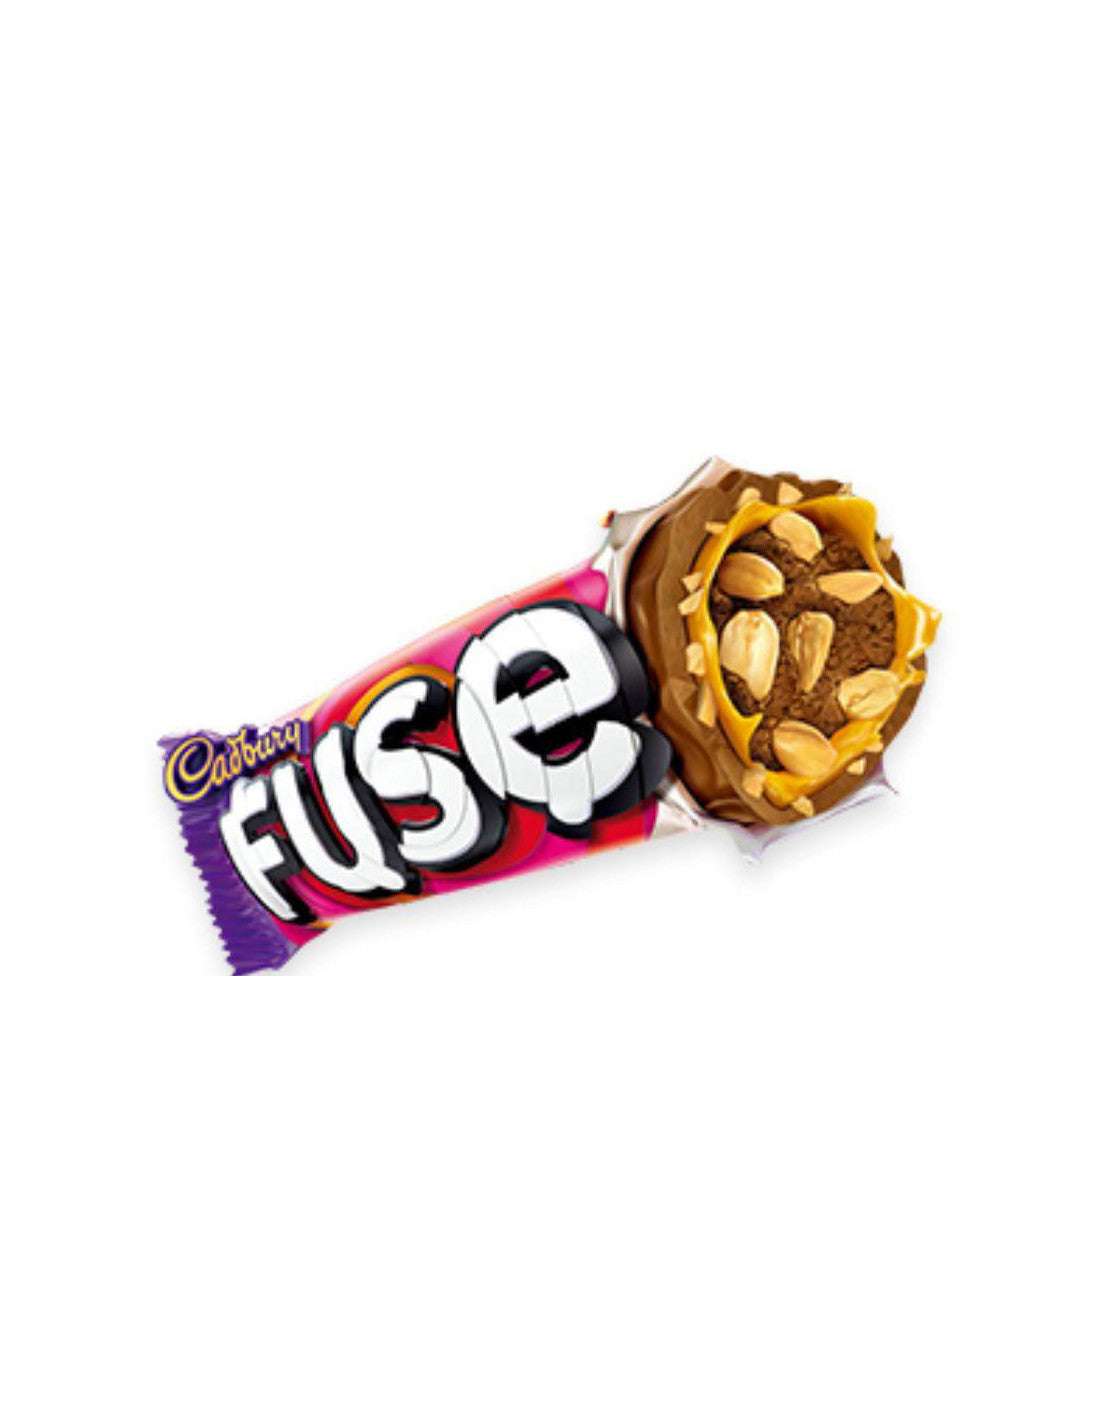 Cadbury Fuse Chocolate